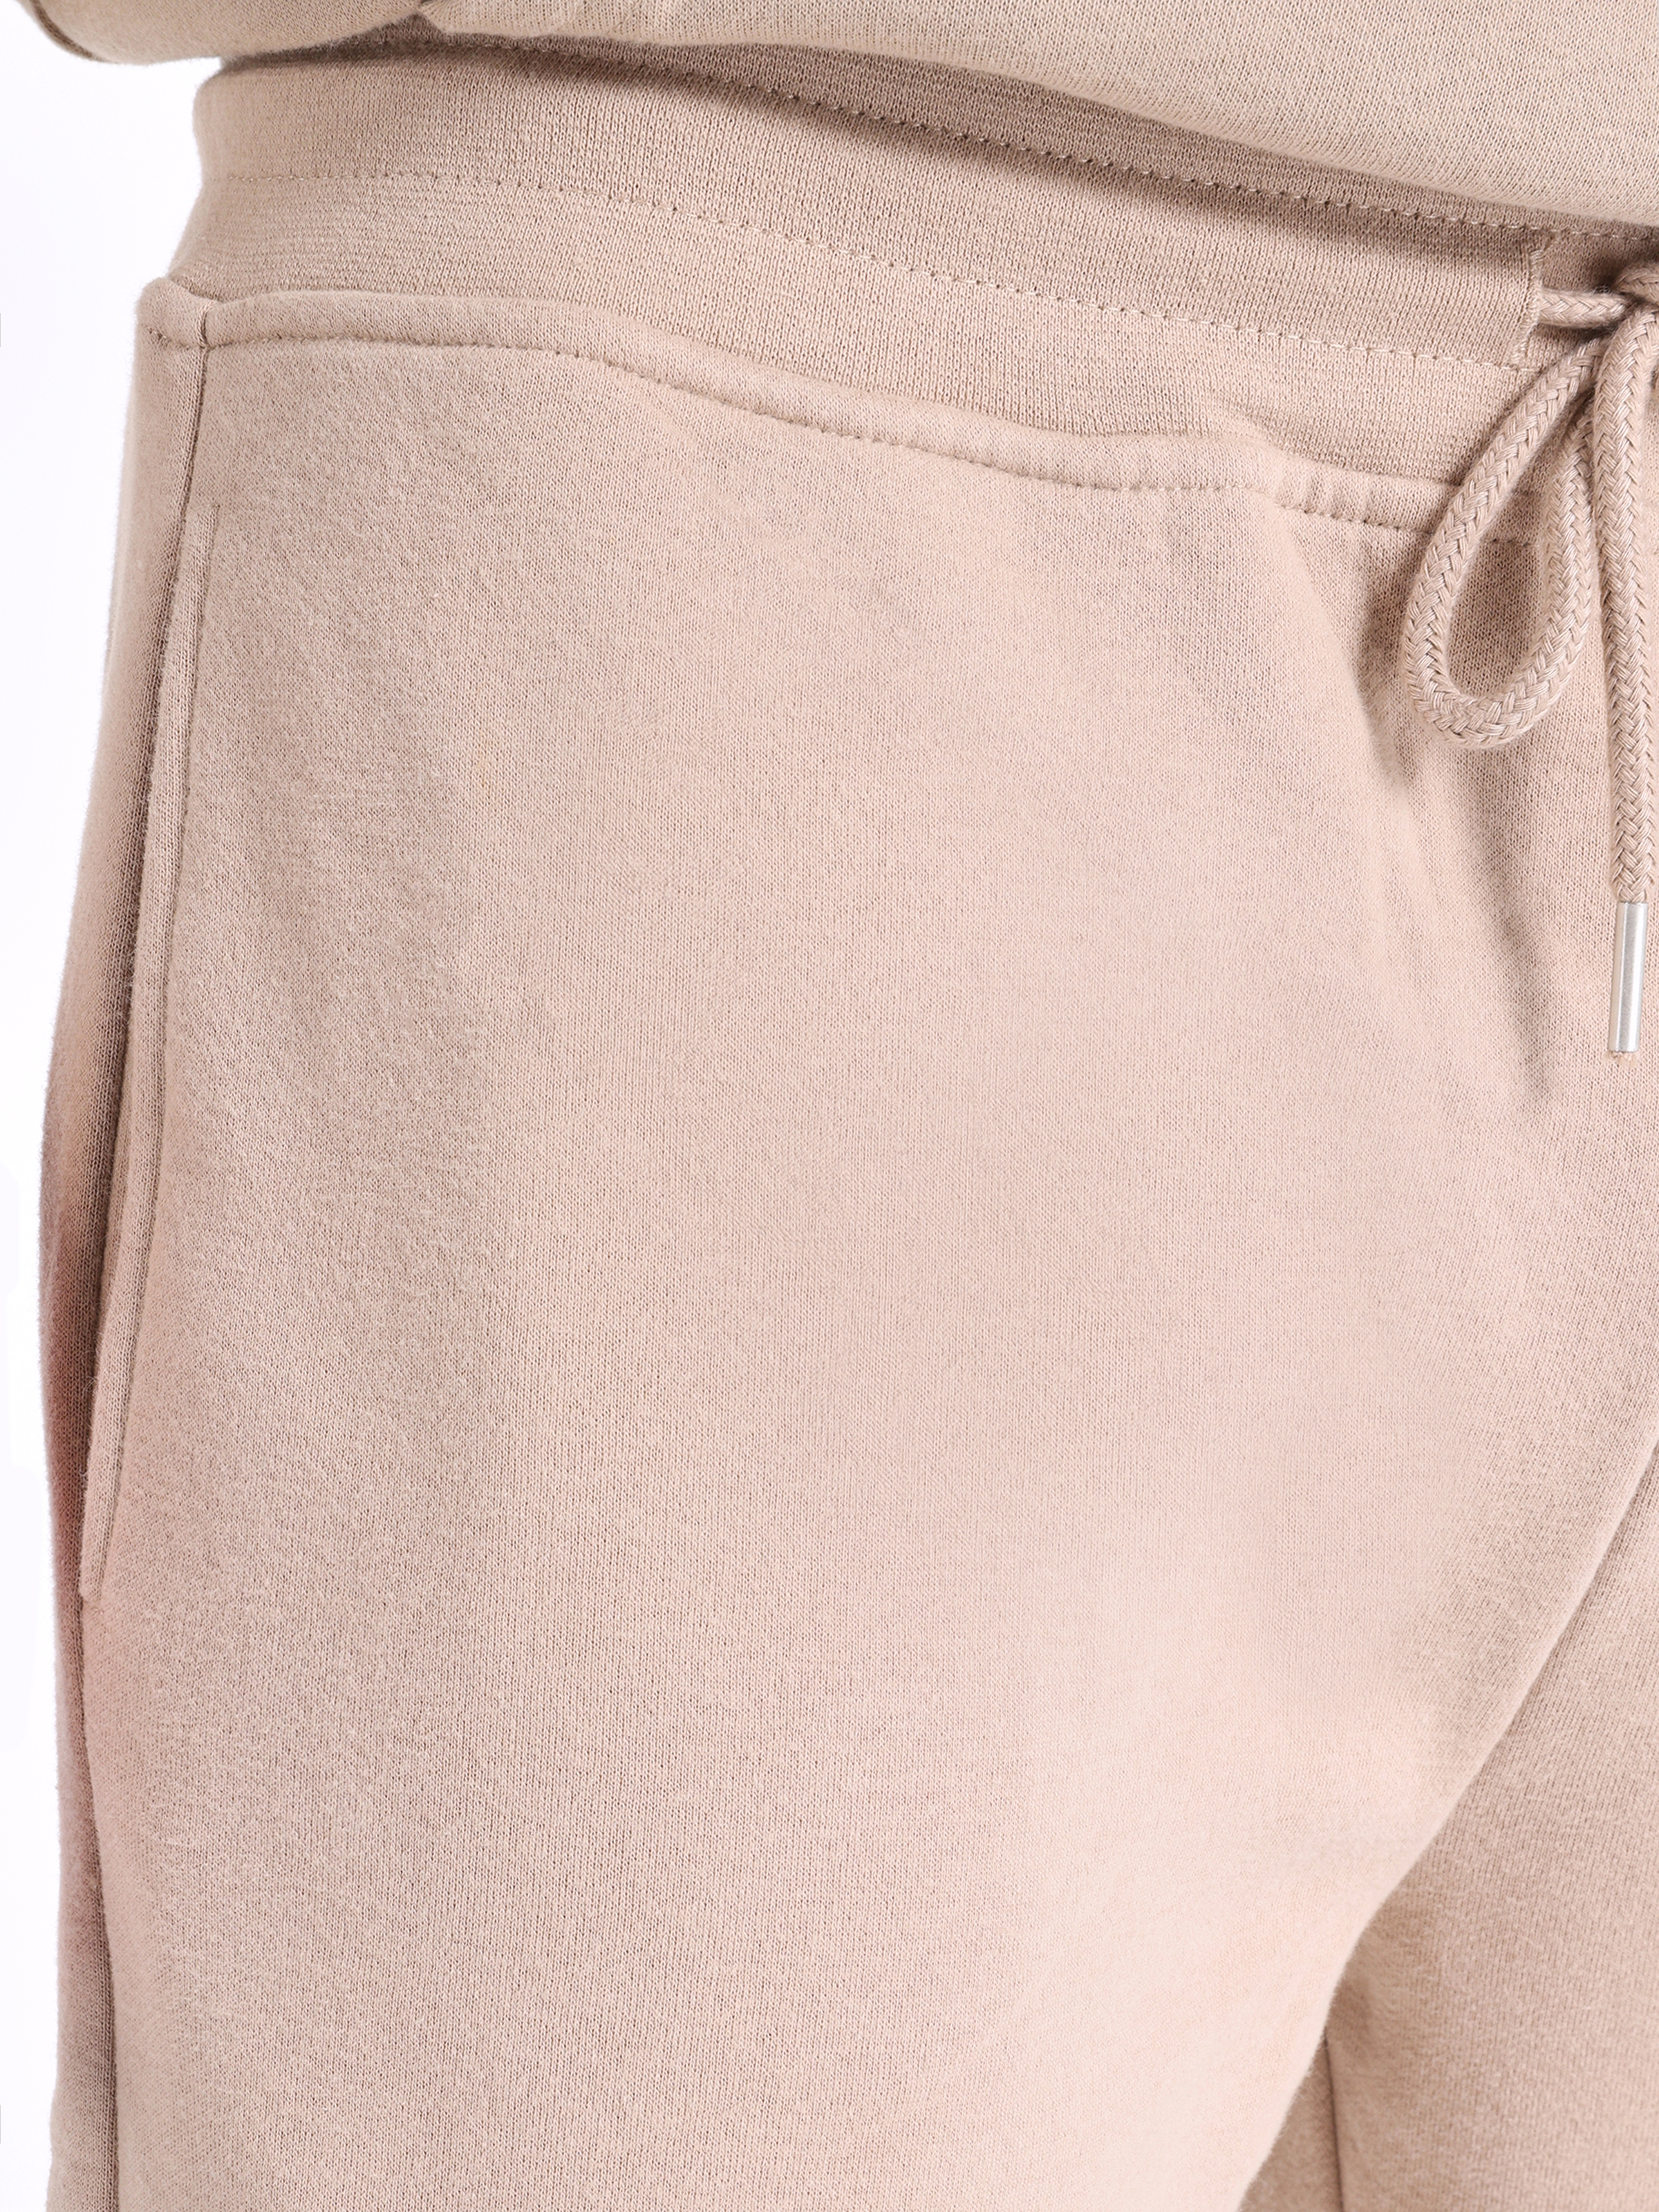 Afișați detalii pentru Pantaloni De Trening De Barbati Bej Slim Fit 